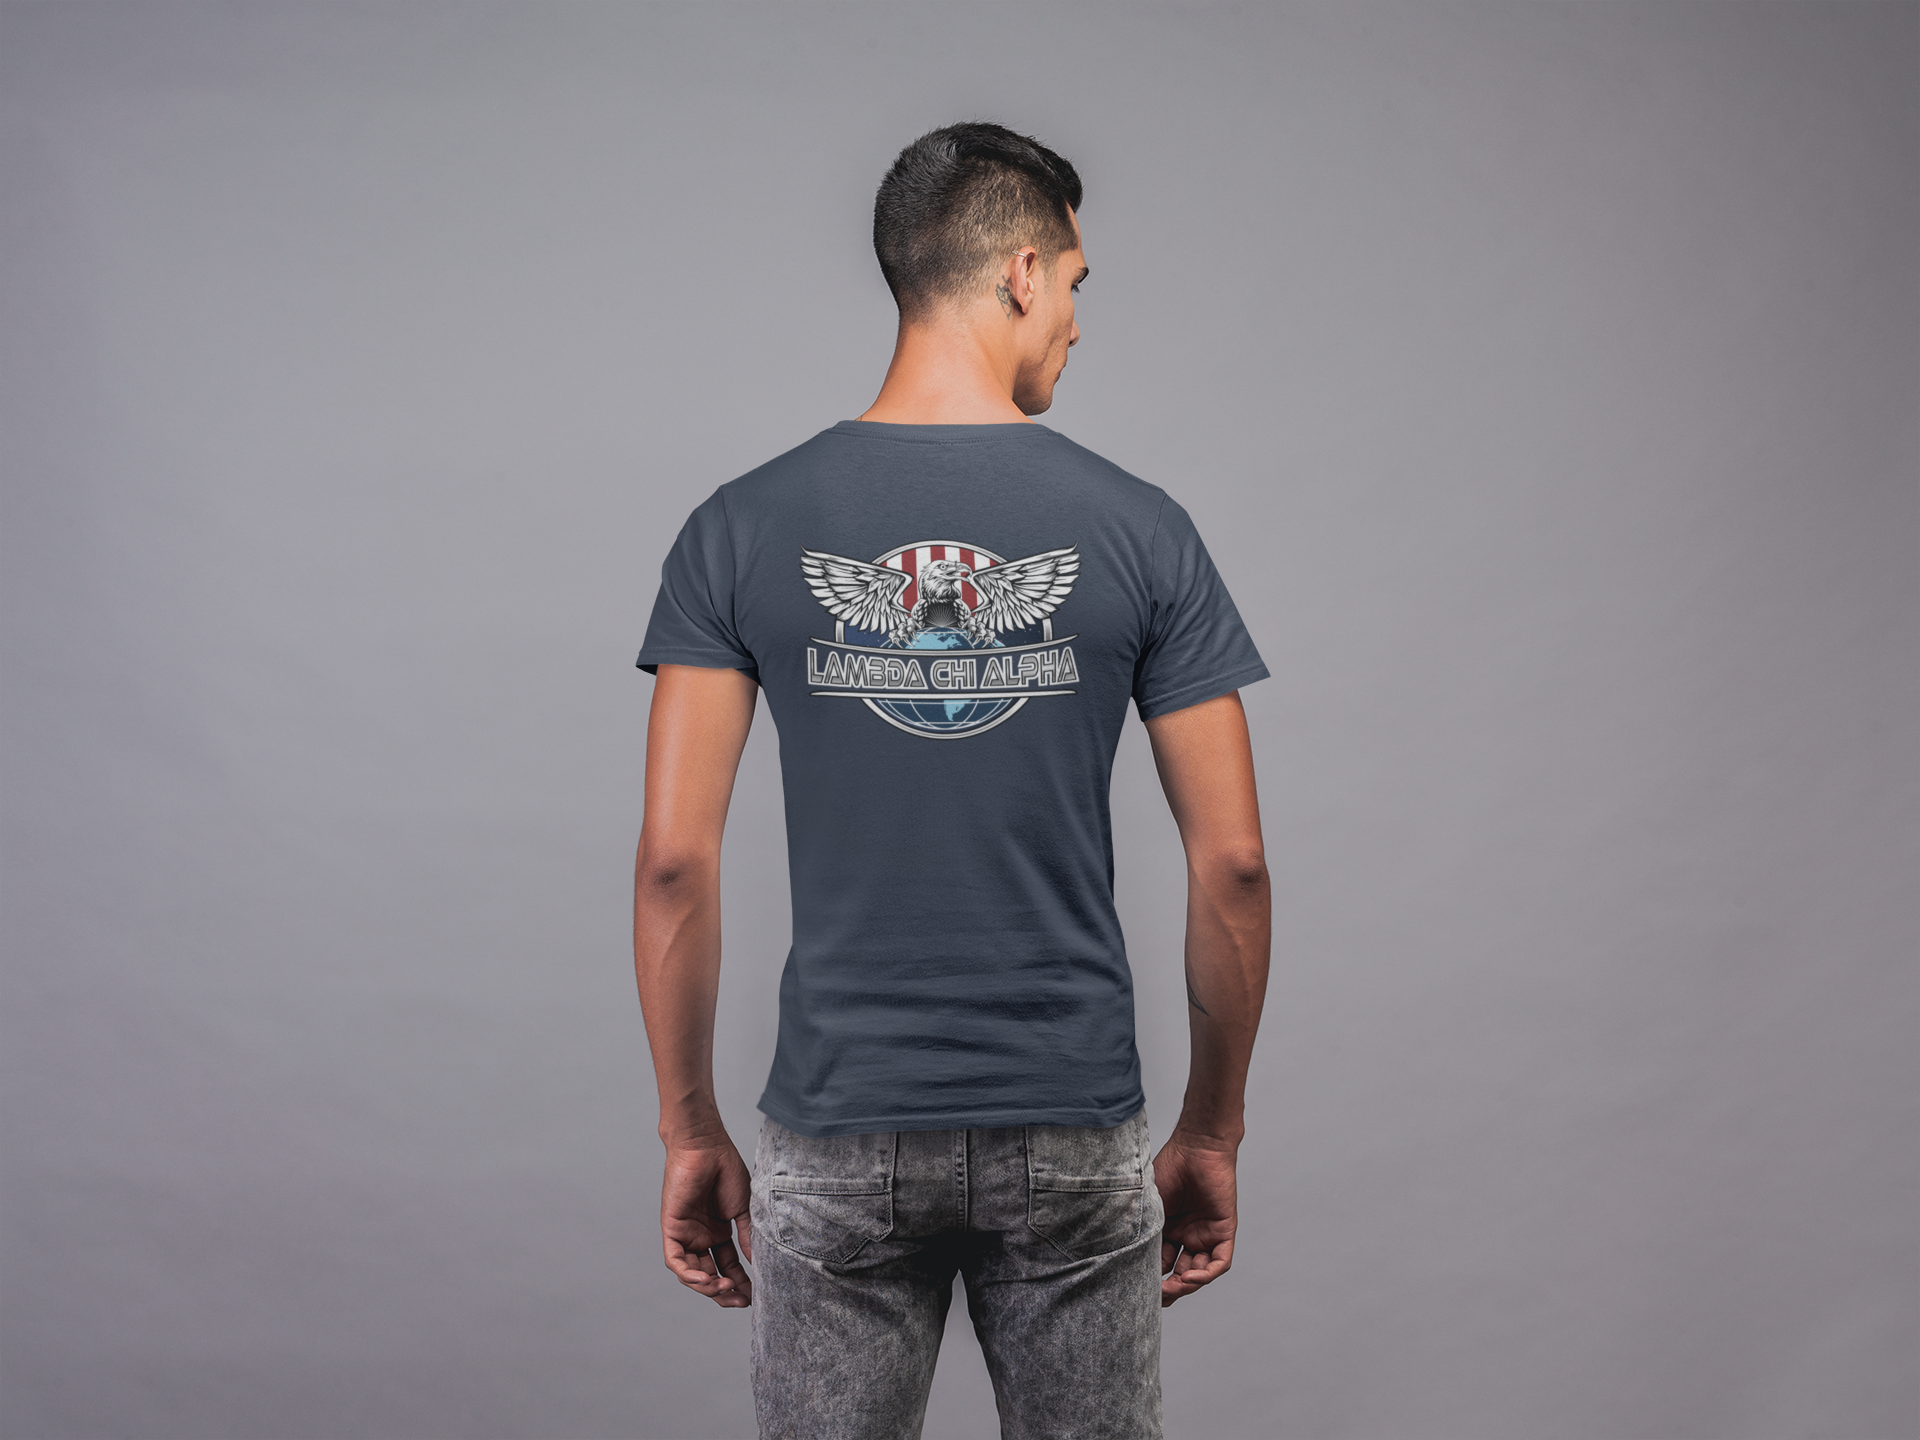 Lambda Chi Alpha Graphic T-Shirt | The Fraternal Order | Lambda Chi Alpha Fraternity Shirt back model 